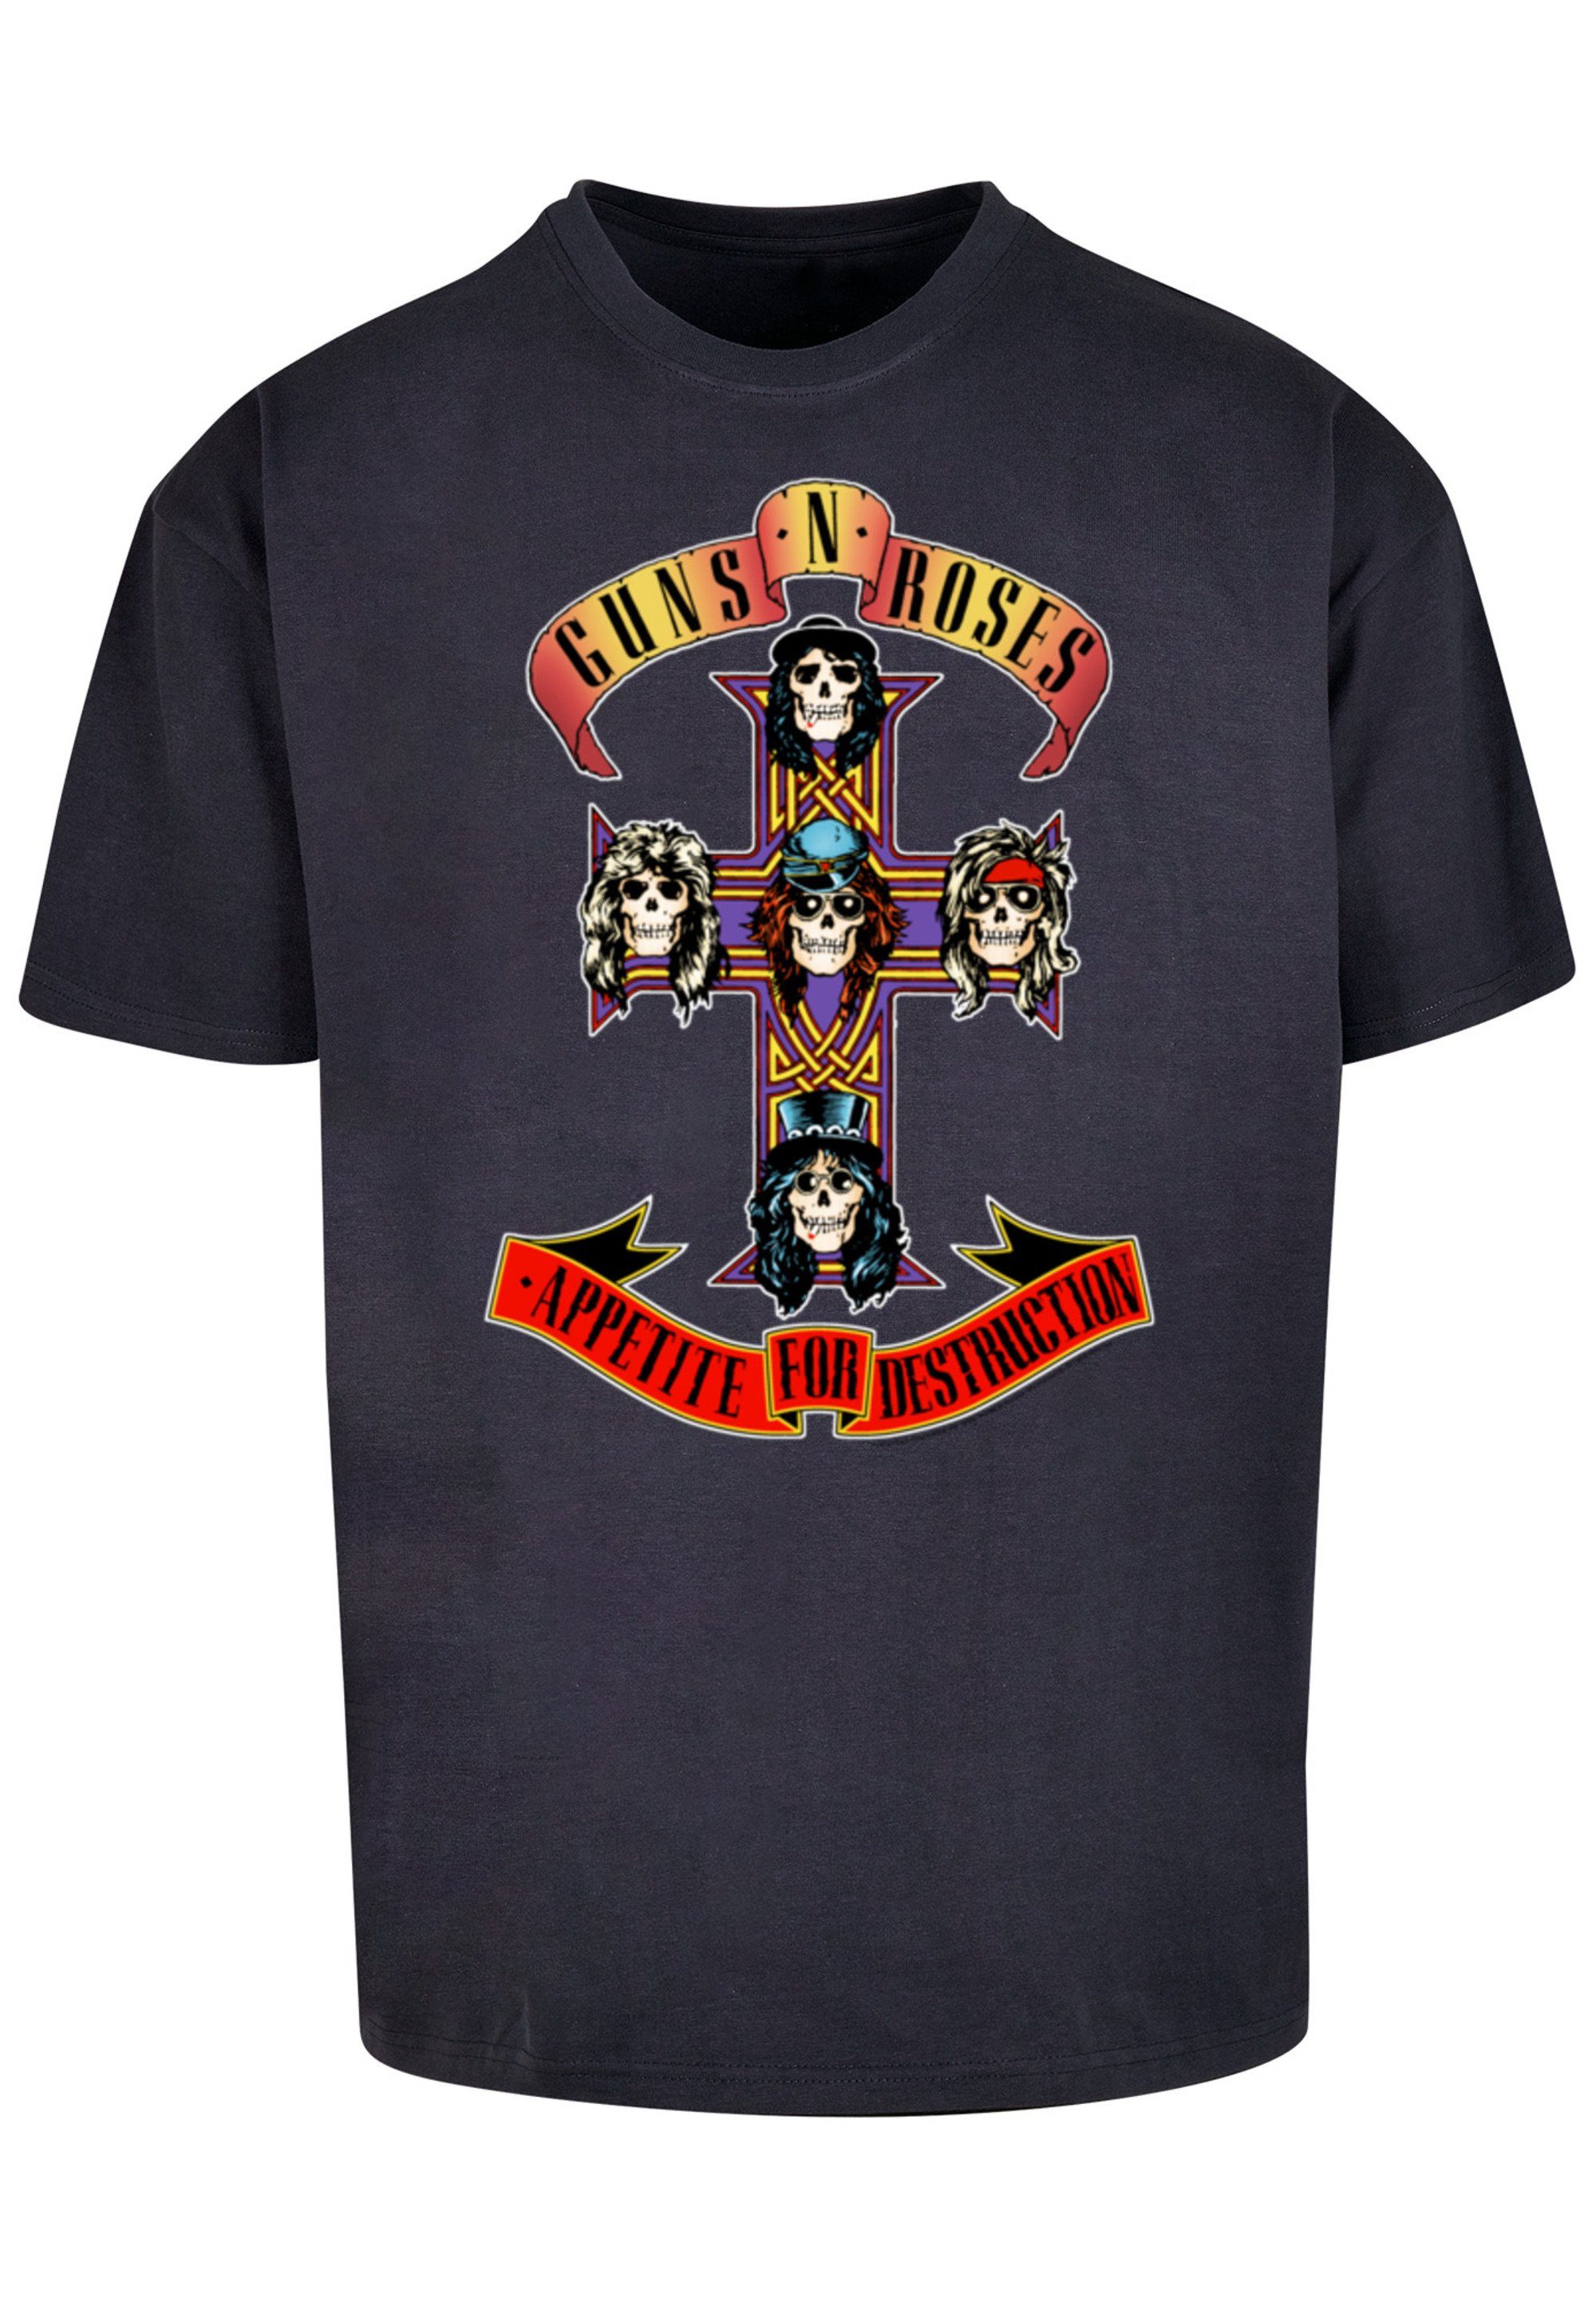 Print Appetite Band F4NT4STIC Guns T-Shirt For Destruction 'n' Roses navy